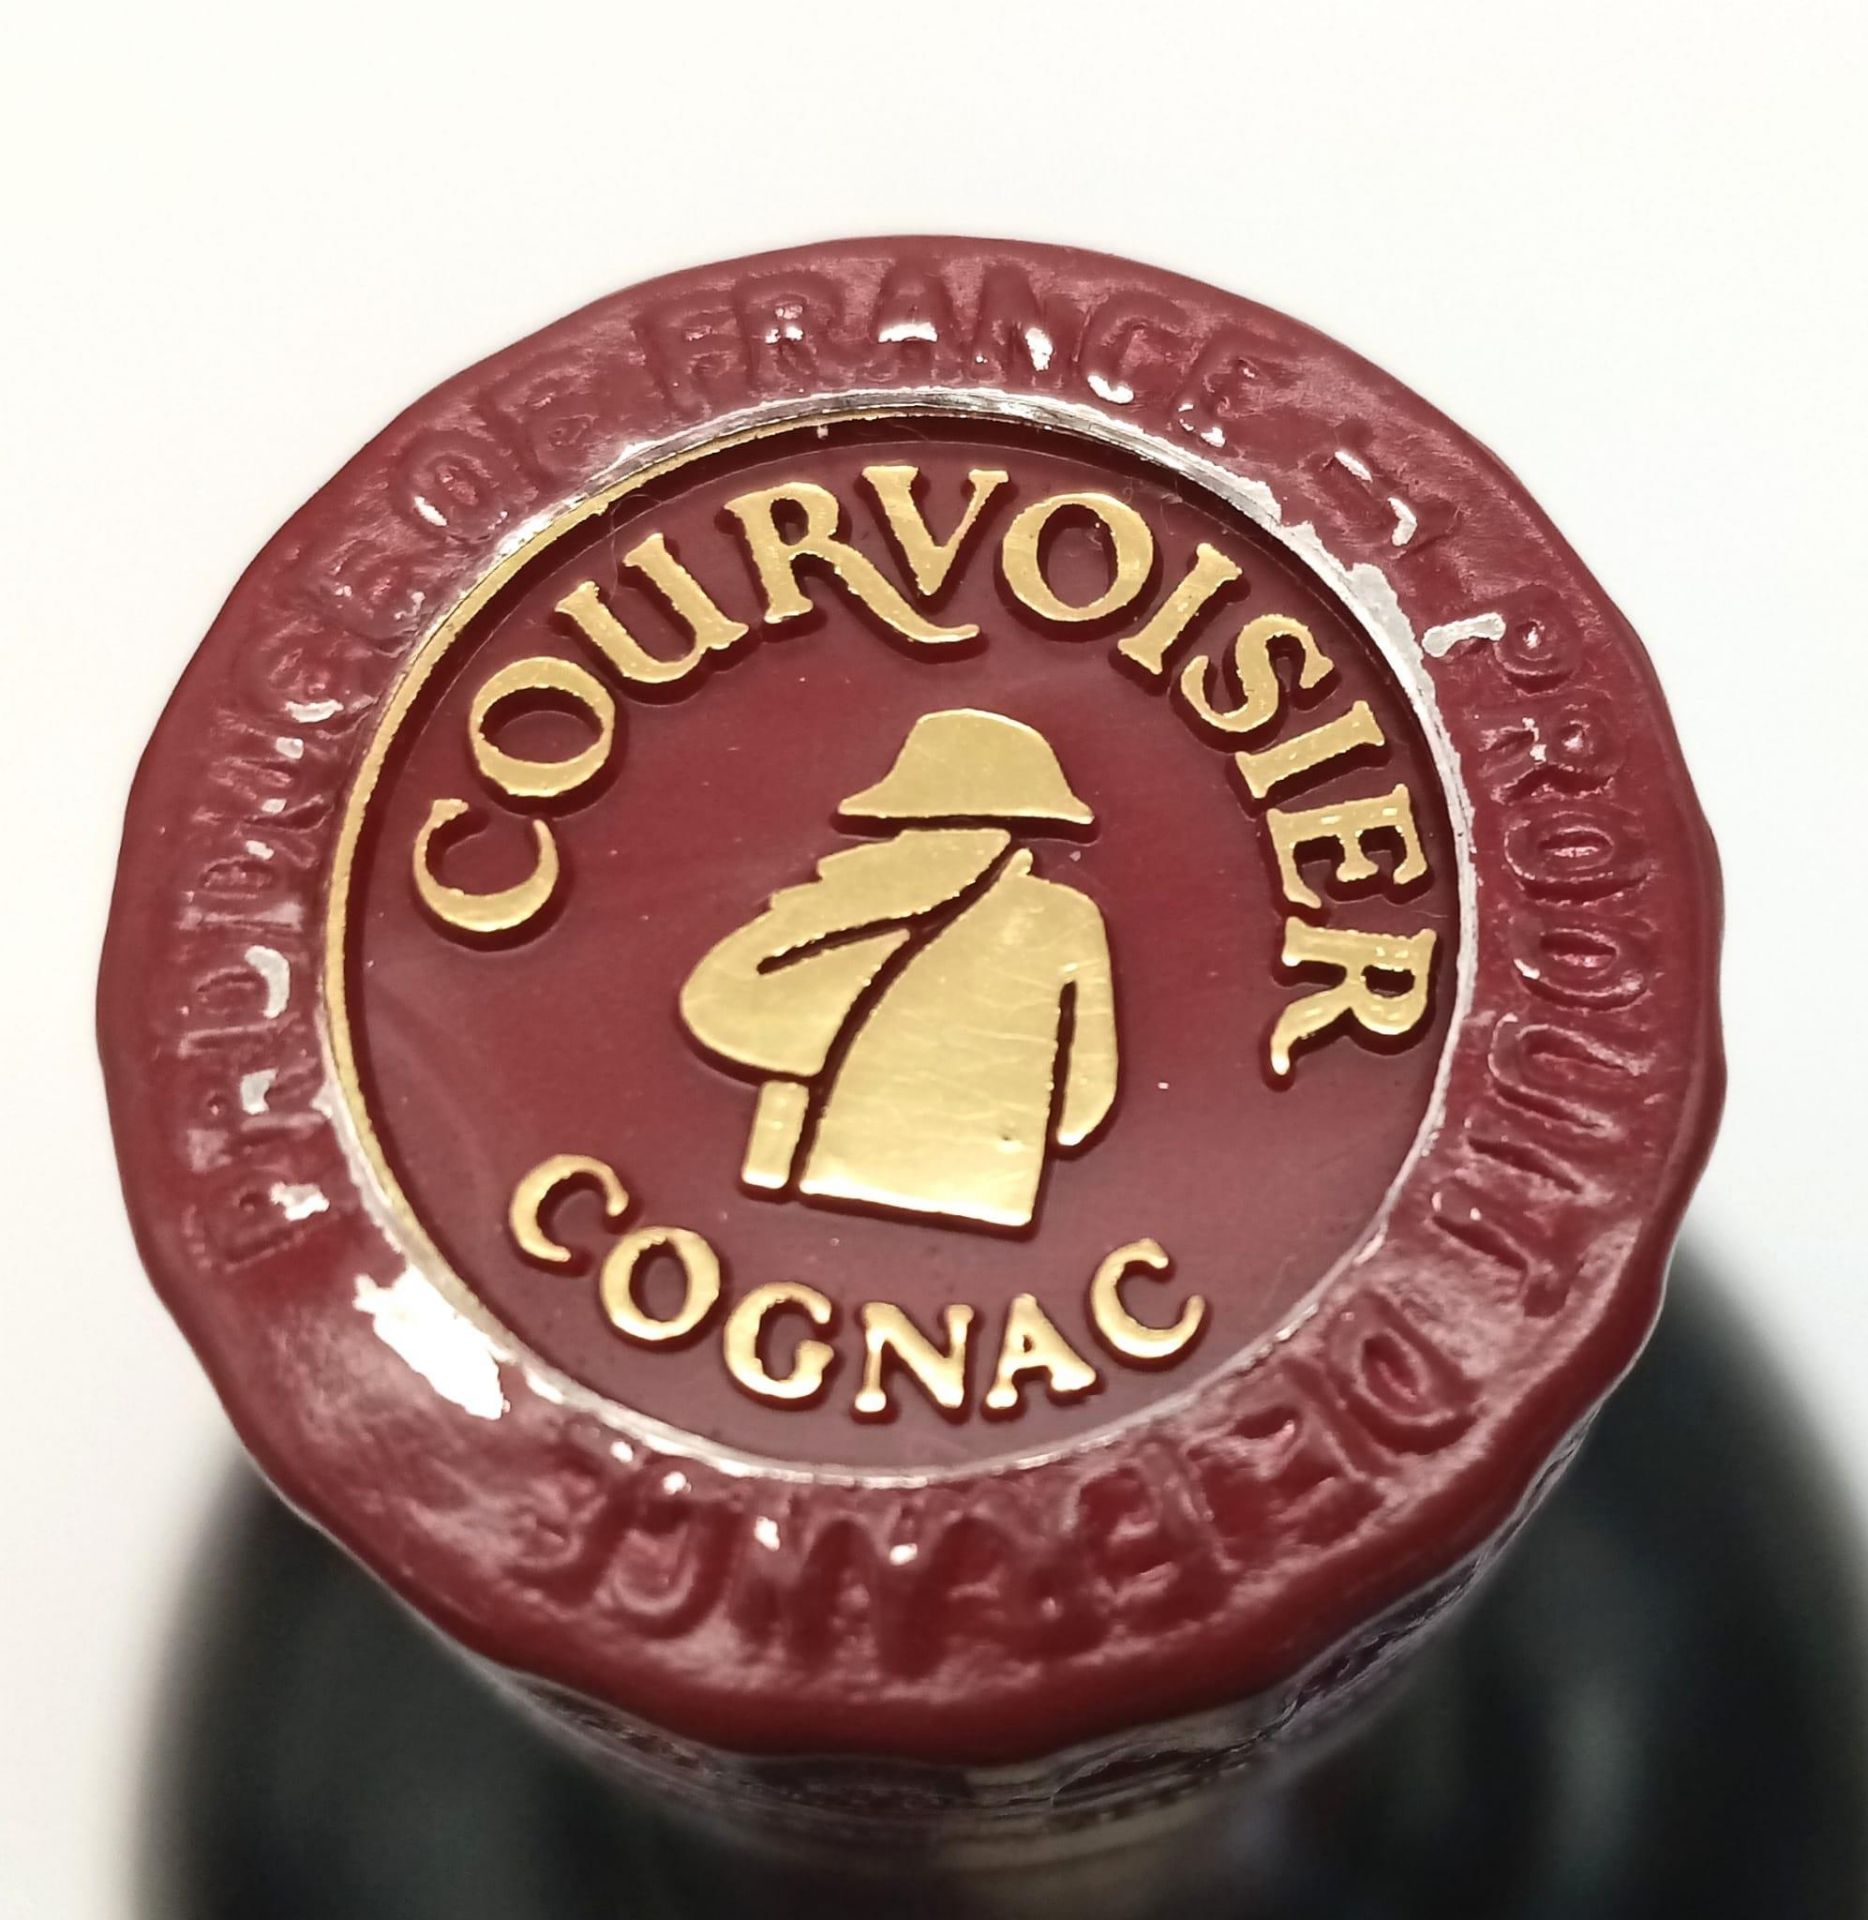 A 1 Litre Bottle of Courvosier Luxe Cognac. In original packaging. - Image 3 of 5